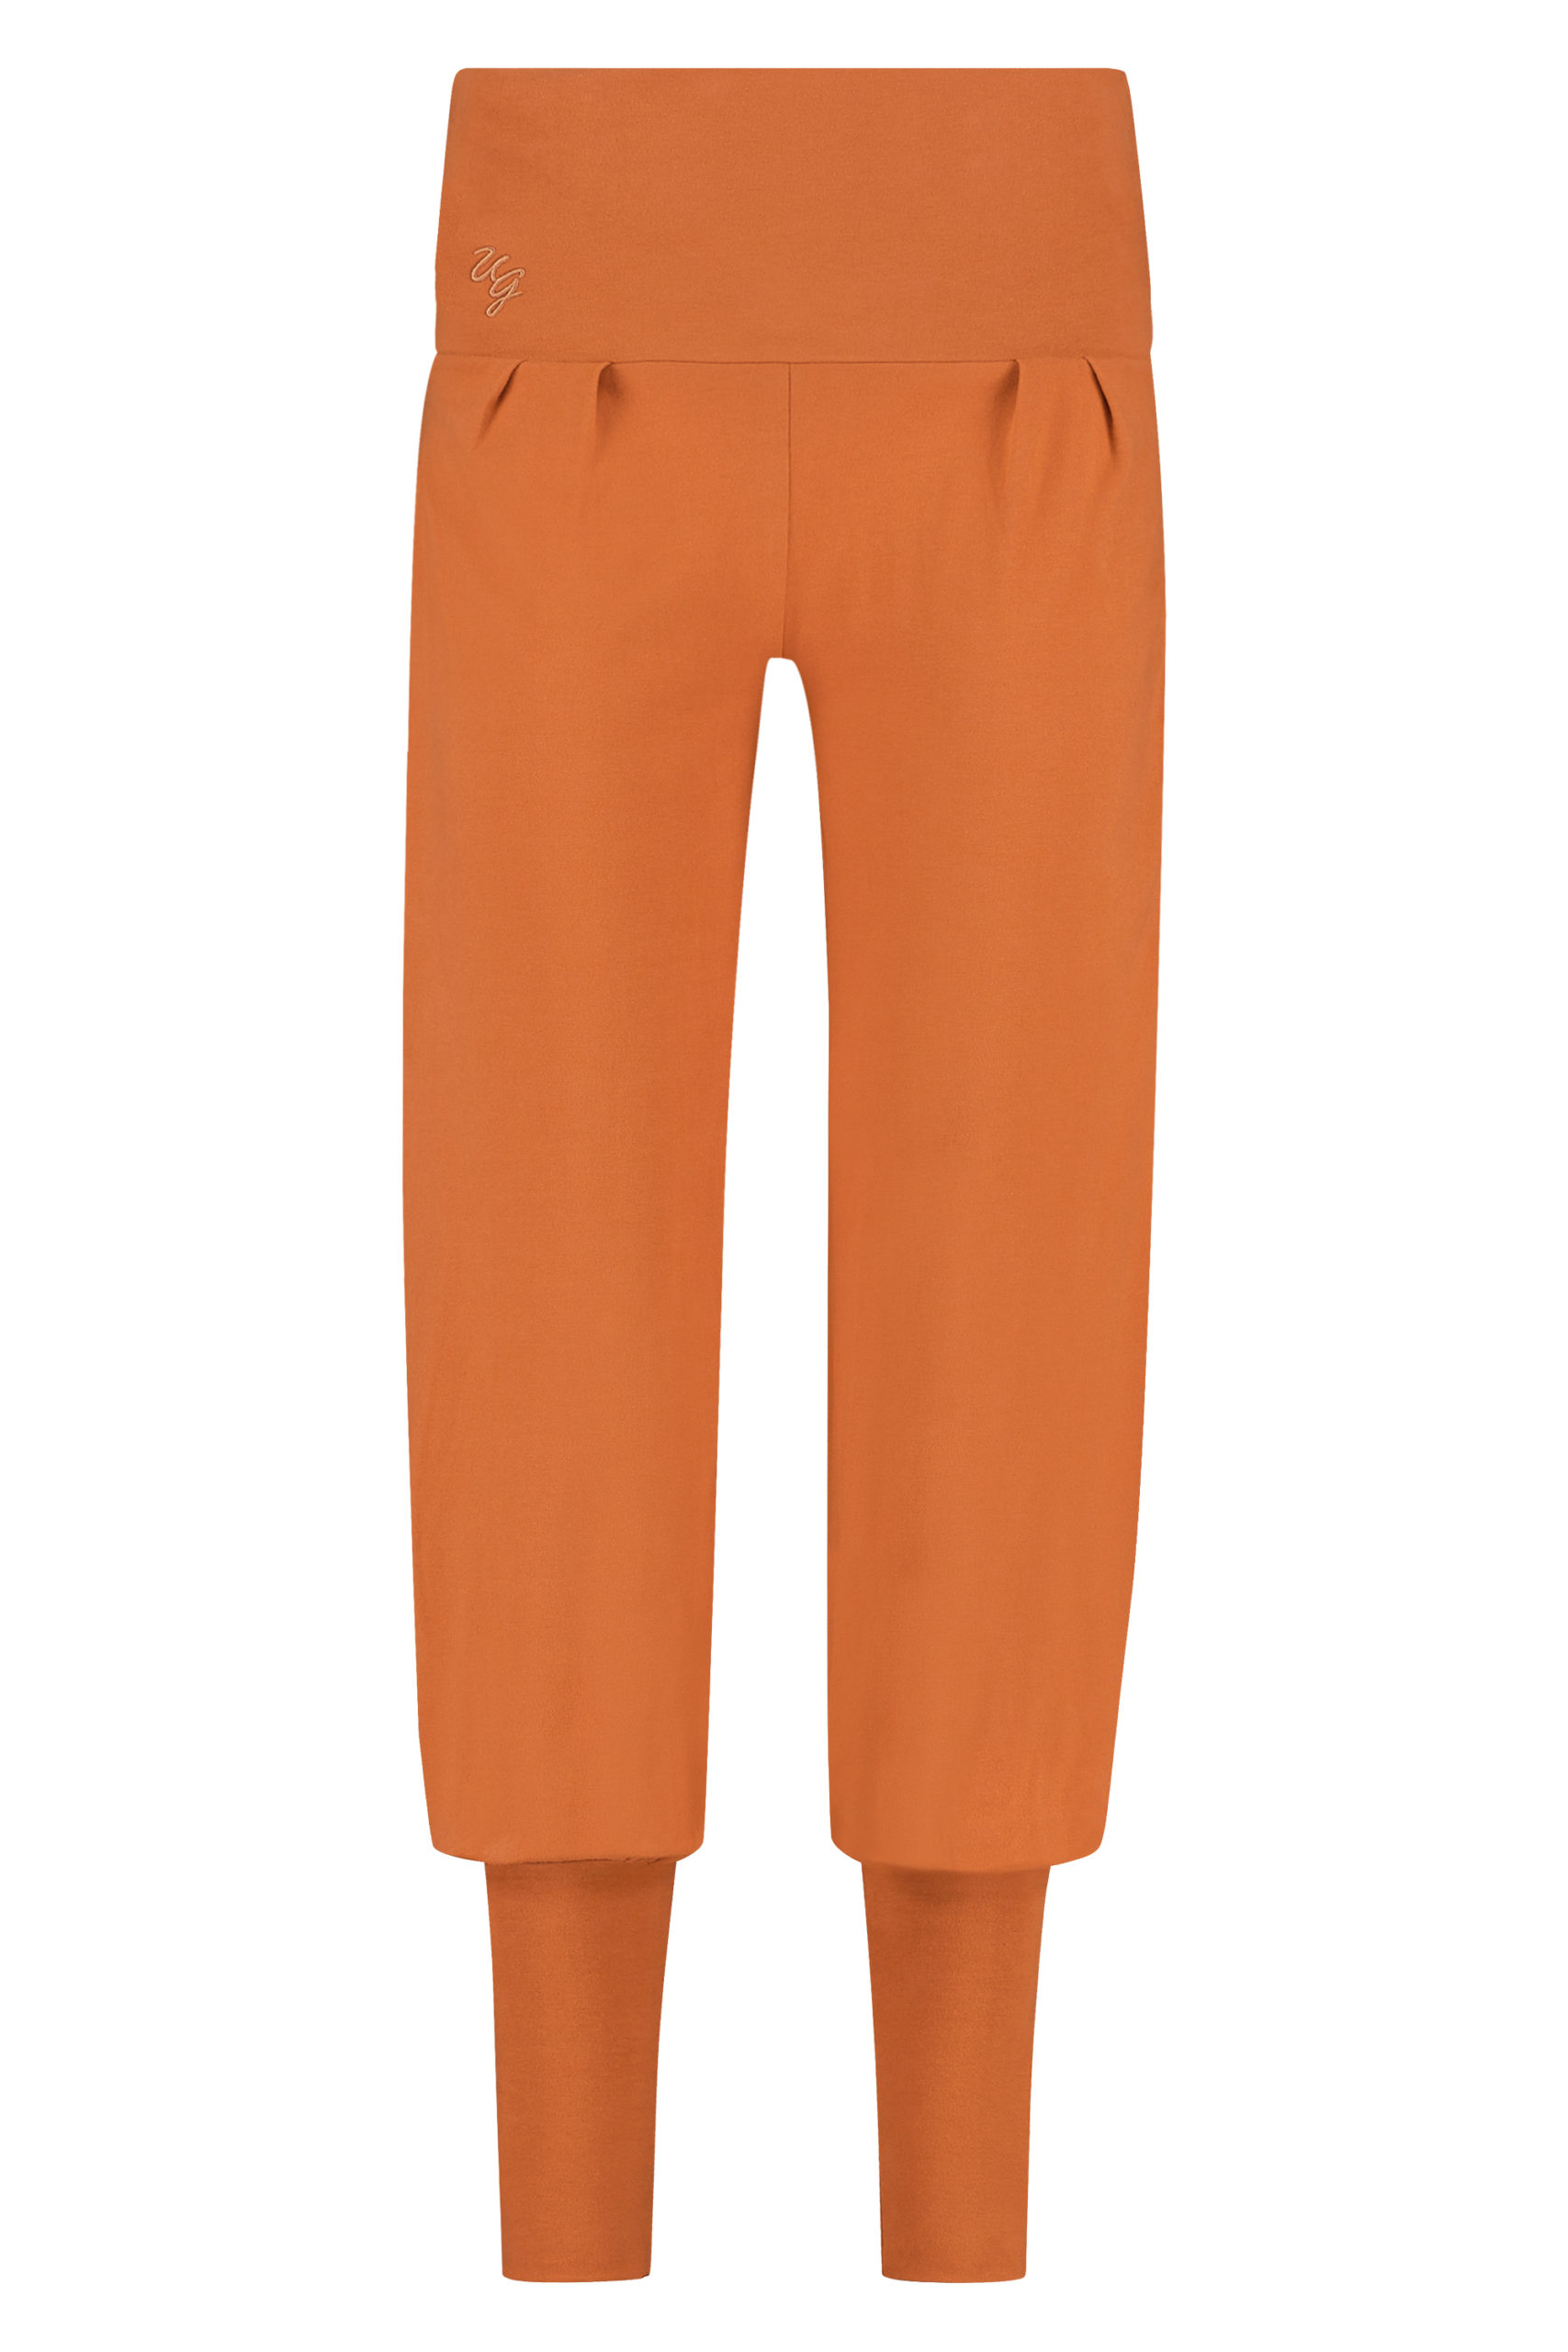 Sukha pants-bombay brown-11345539-front